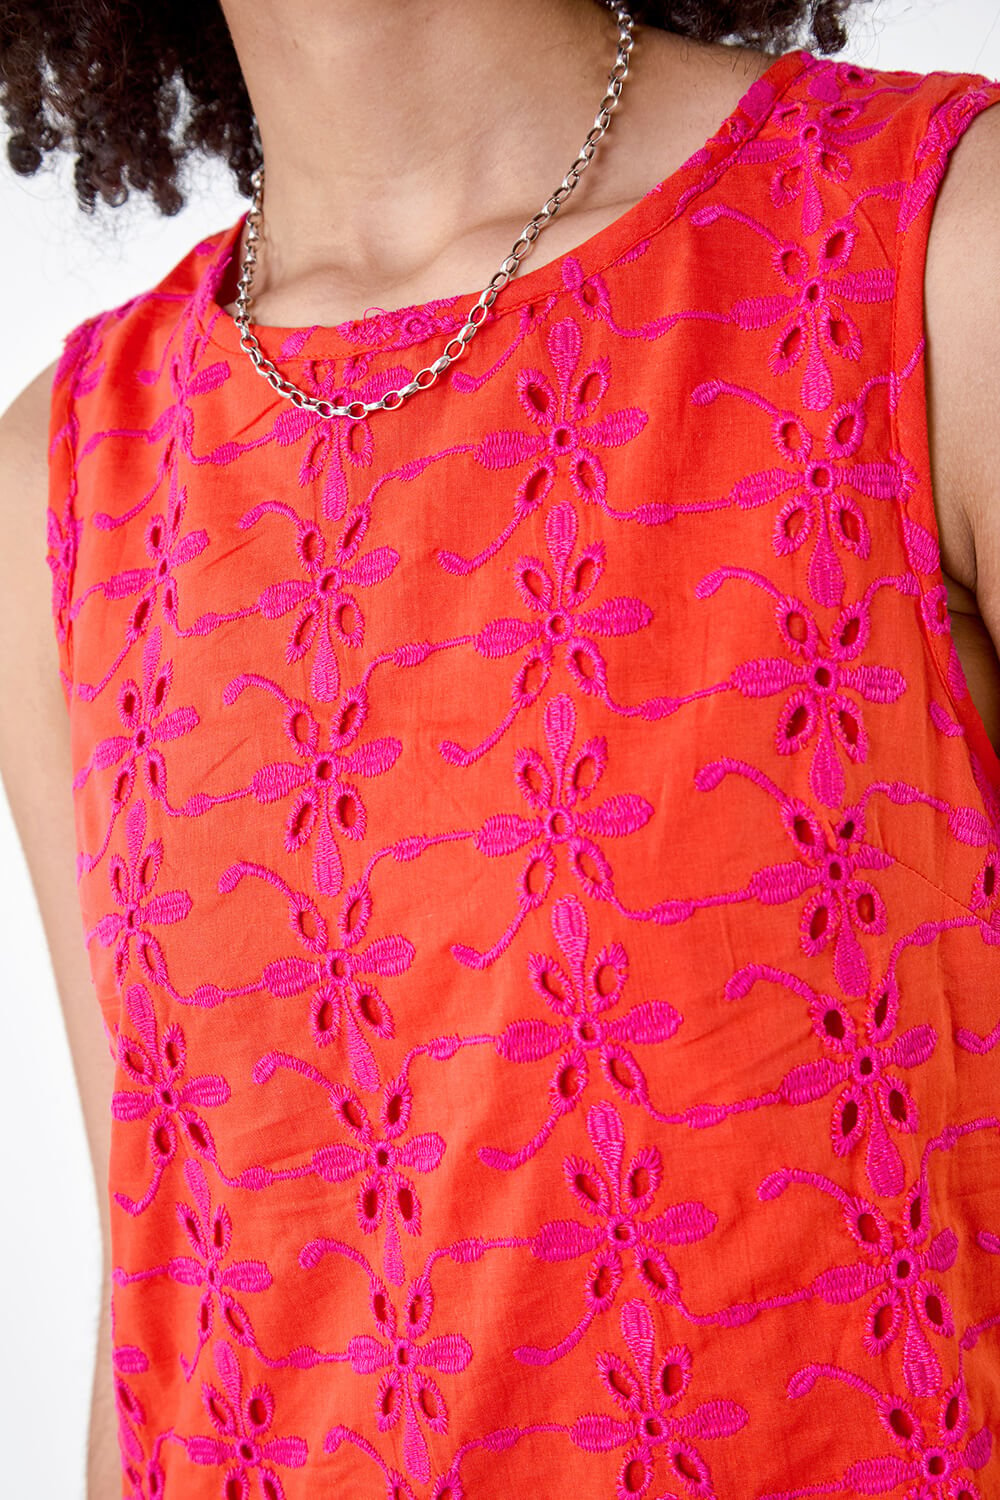 ORANGE Floral Embroidered Cotton Shift Dress, Image 5 of 5